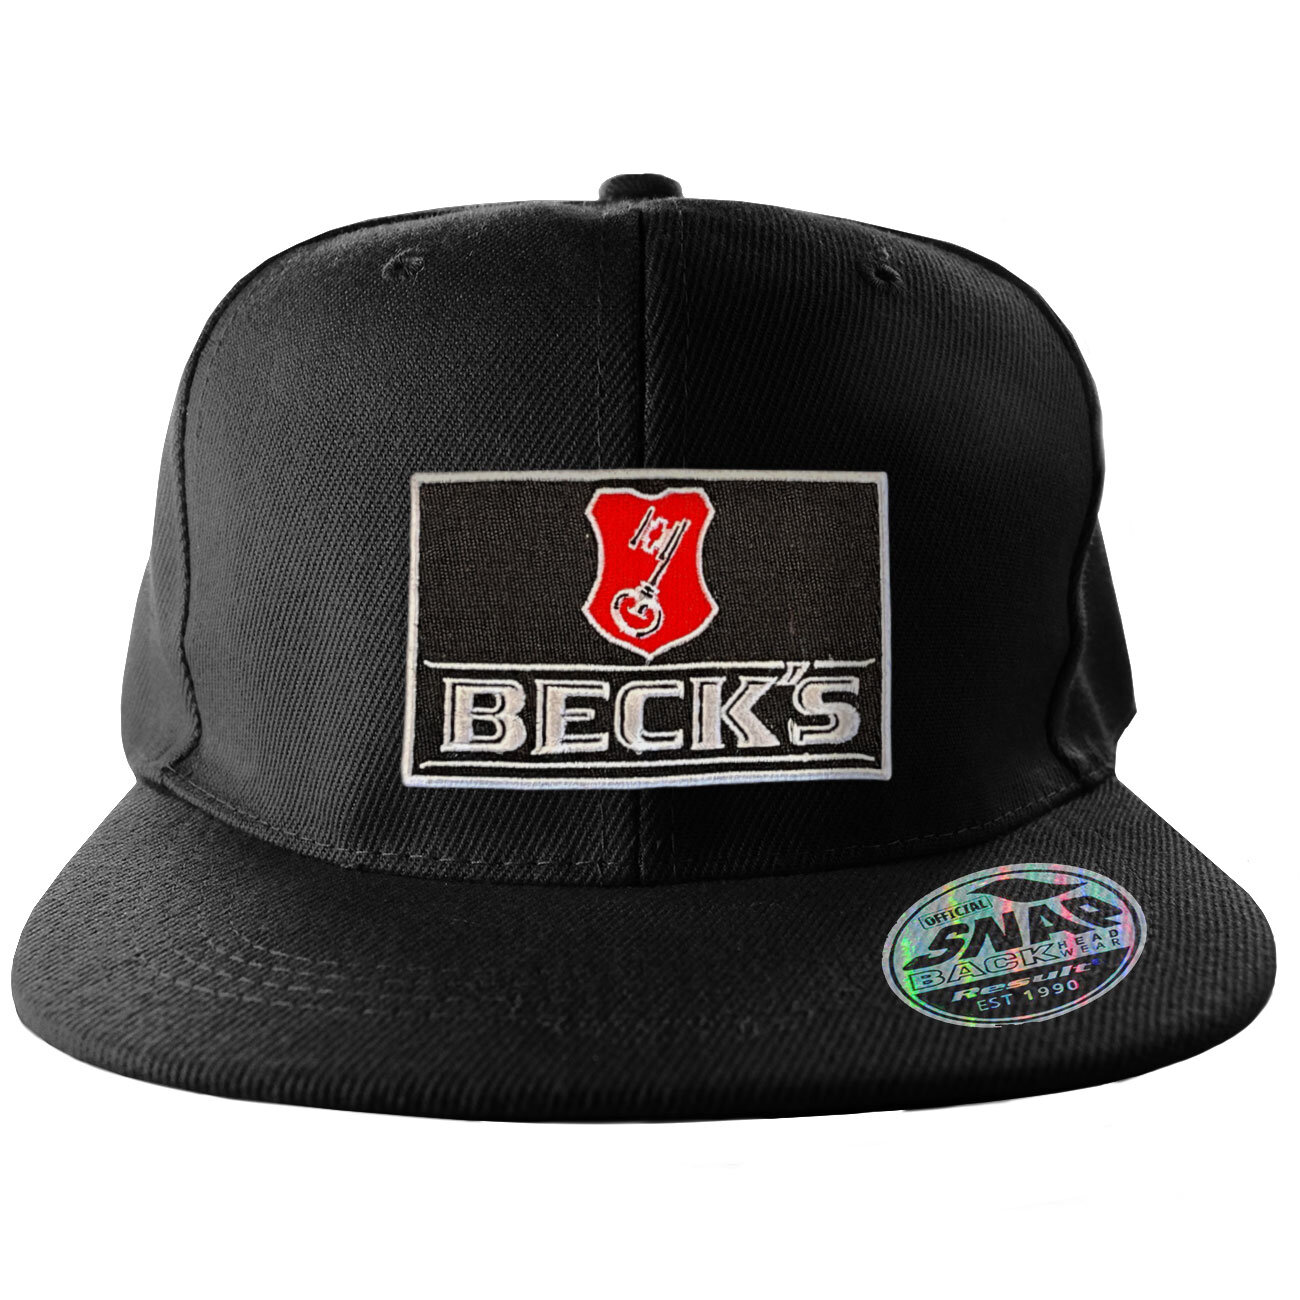 Beck's Beer Patch Standard Snapback Cap